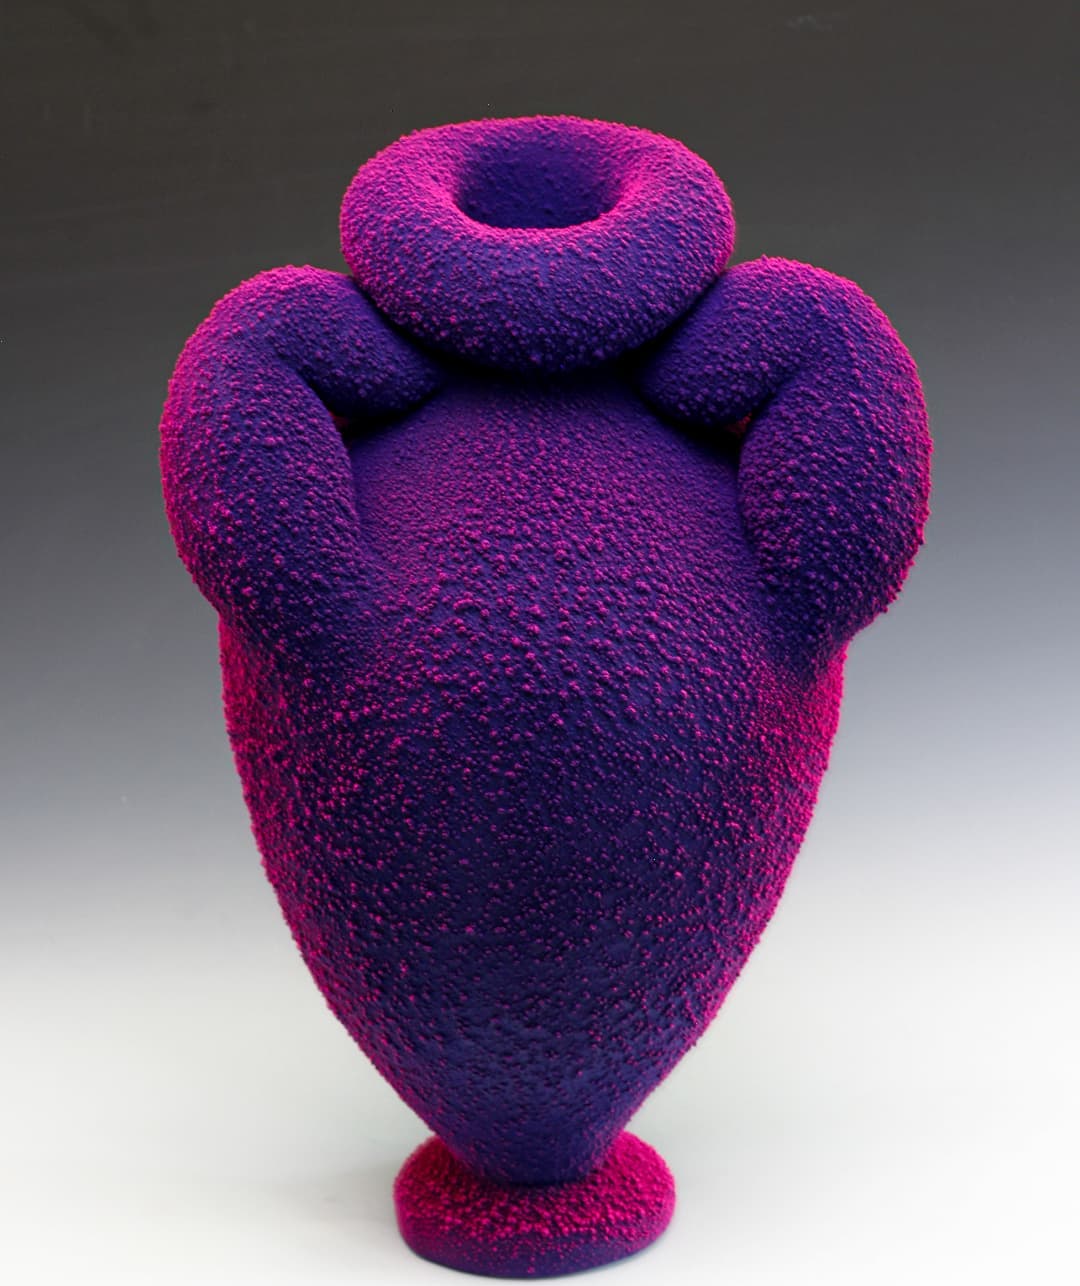 Glowing Sculptural Ceramic Vessels By Maxwell Mustardo (4)